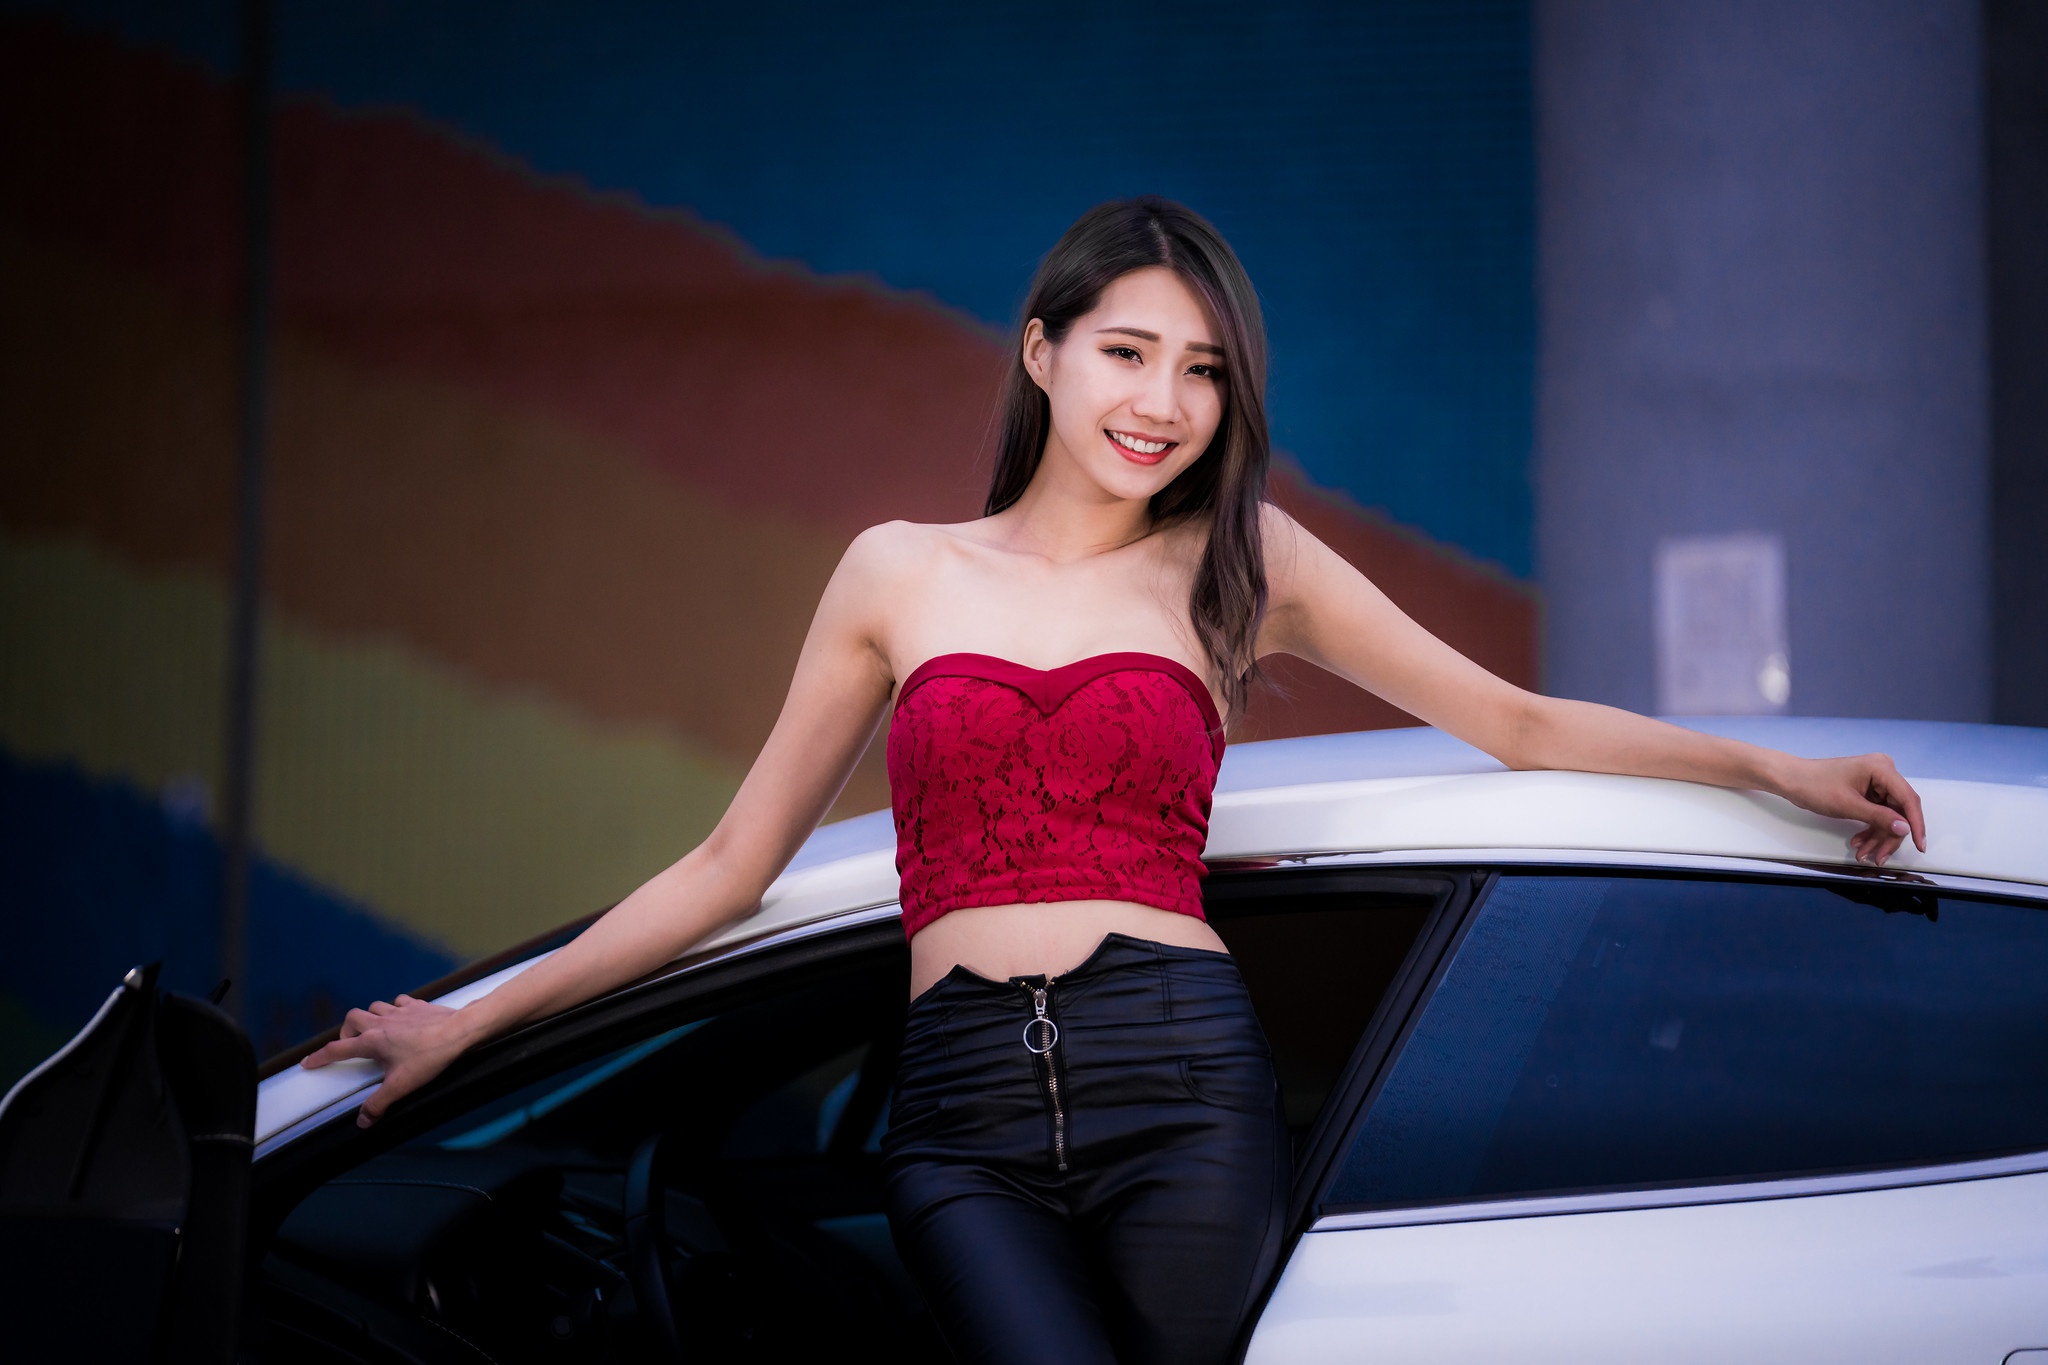 Asian Model Women Long Hair Brunette Red Tops Black Pants Car Leaning Bare Shoulders Zipper Smiling 2048x1365